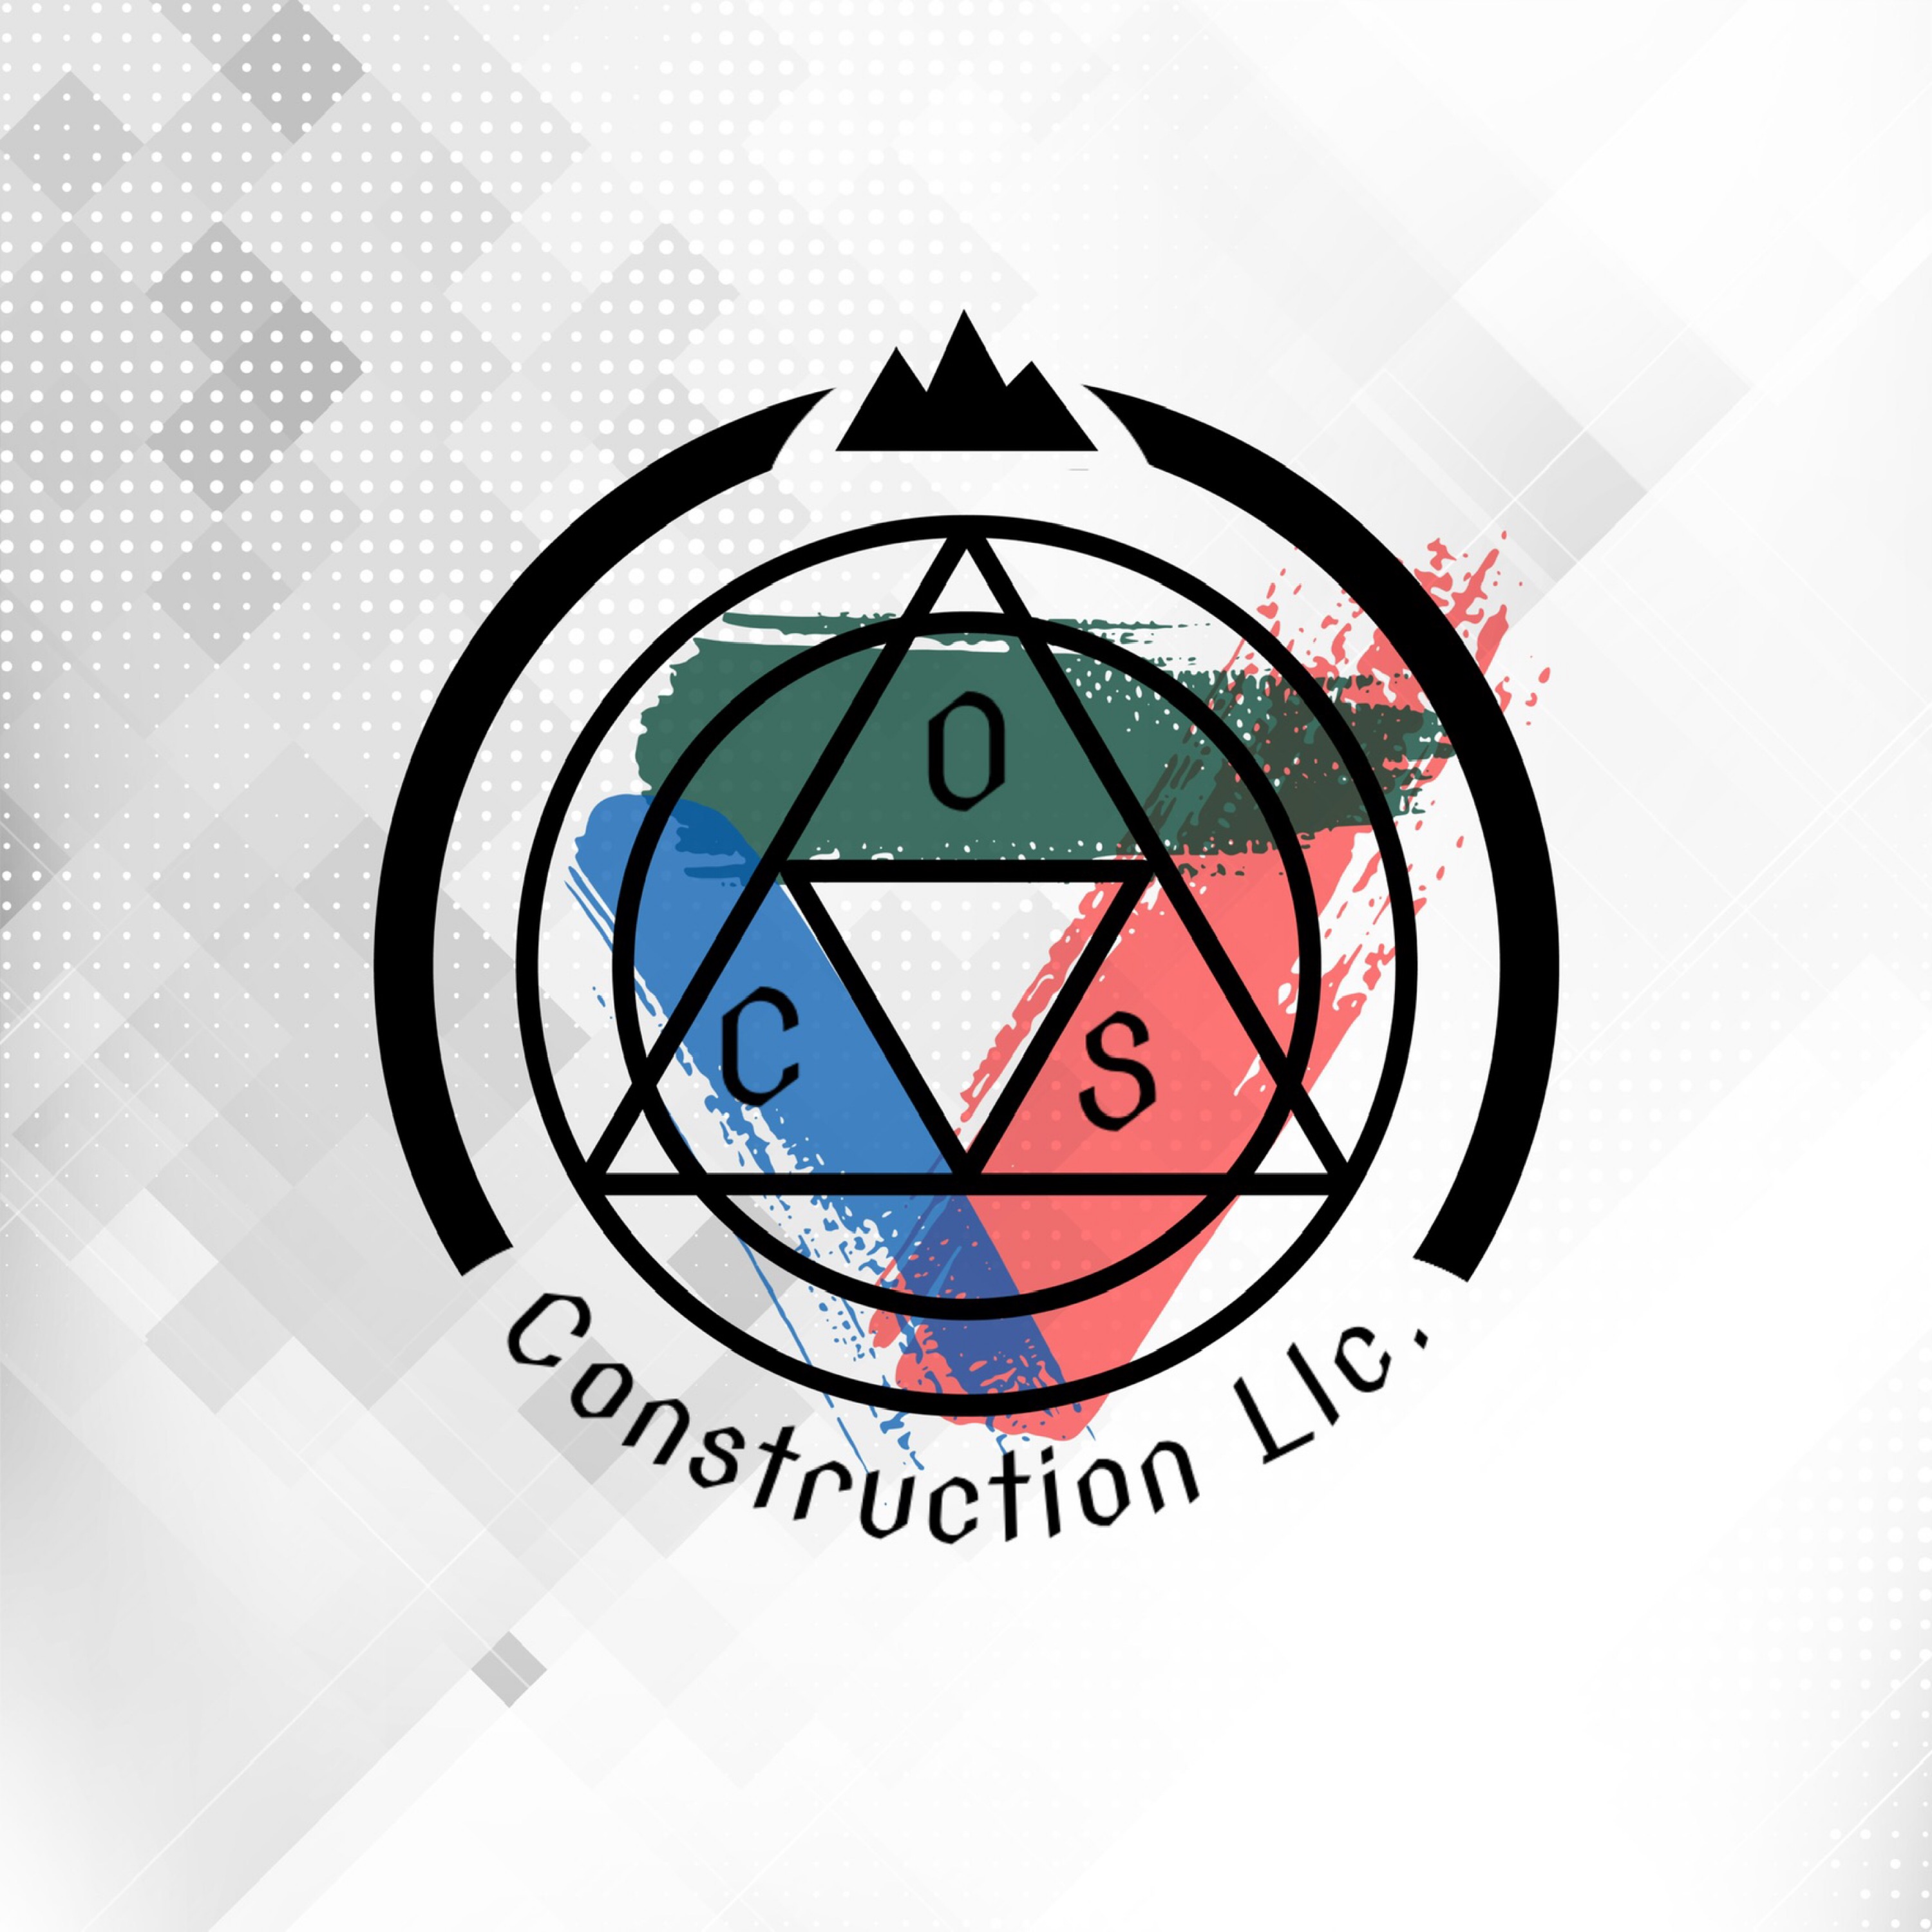 OCS Construction Logo